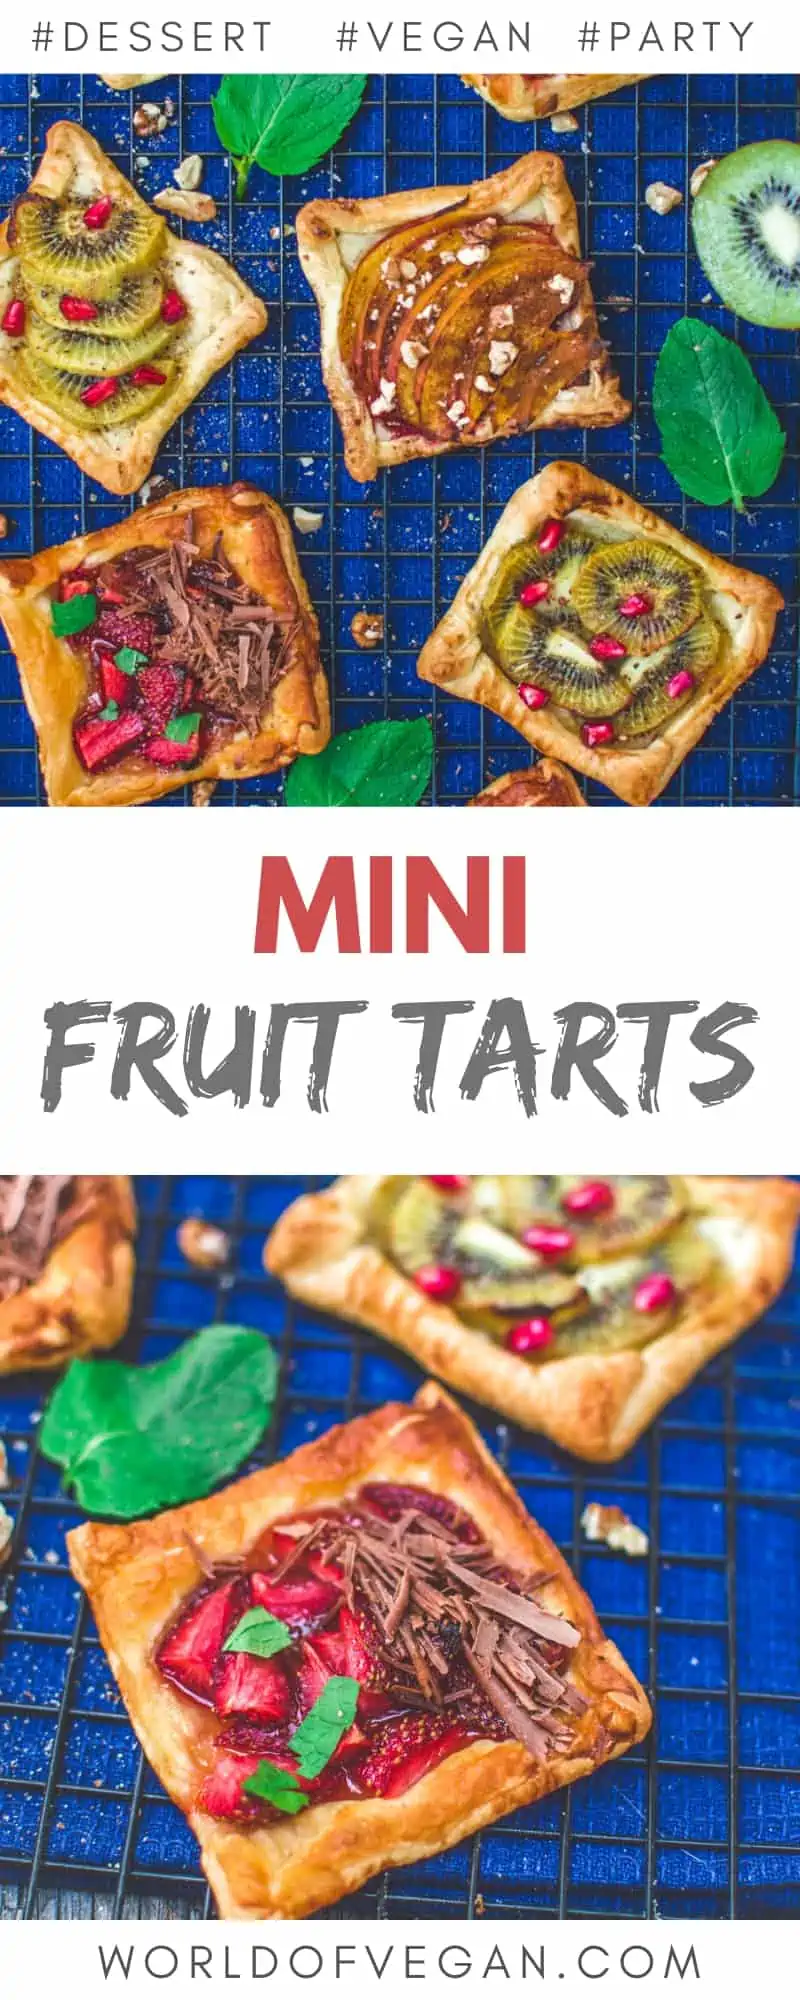 Mini Vegan Fruit Tarts | Easy Dessert Recipe | World of Vegan | #vegan #tarts #fruits #fruits #dessert #worldofvegan